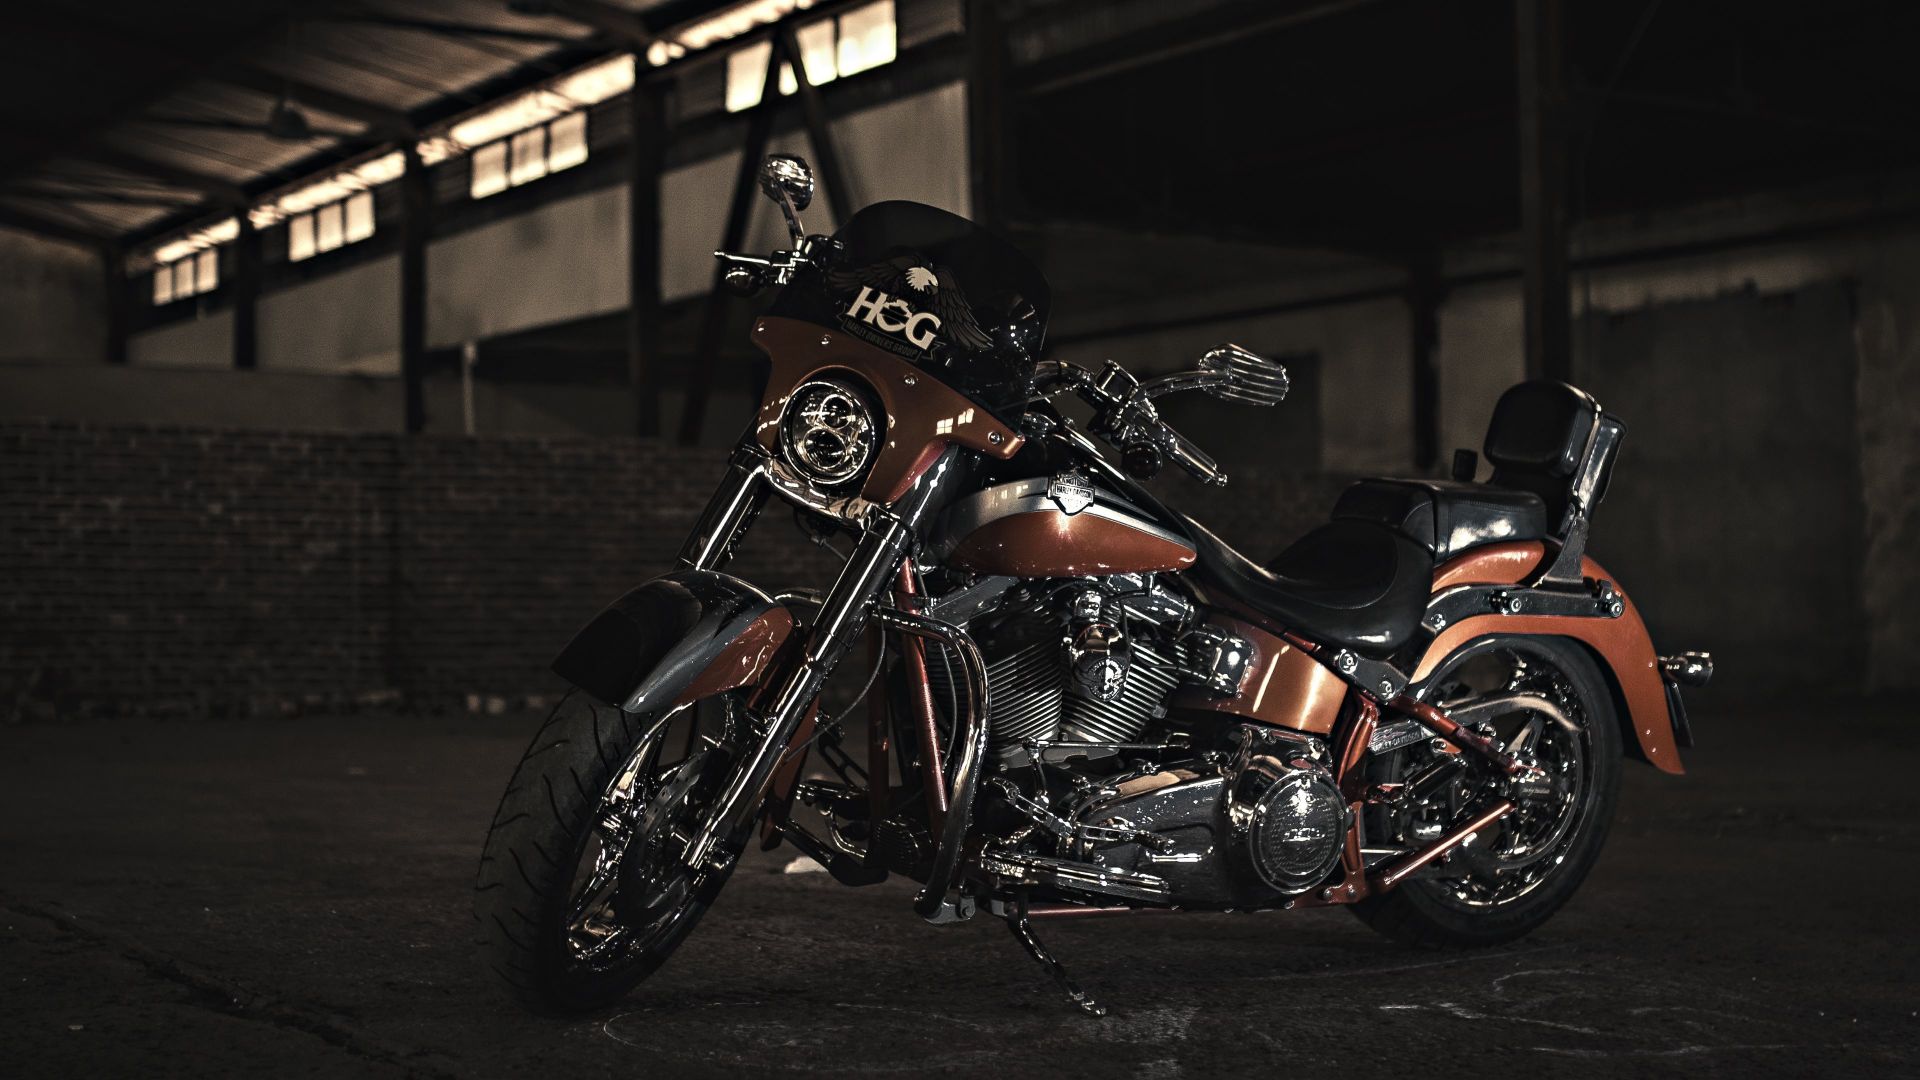 Wallpaper Harley davidson motorcycle